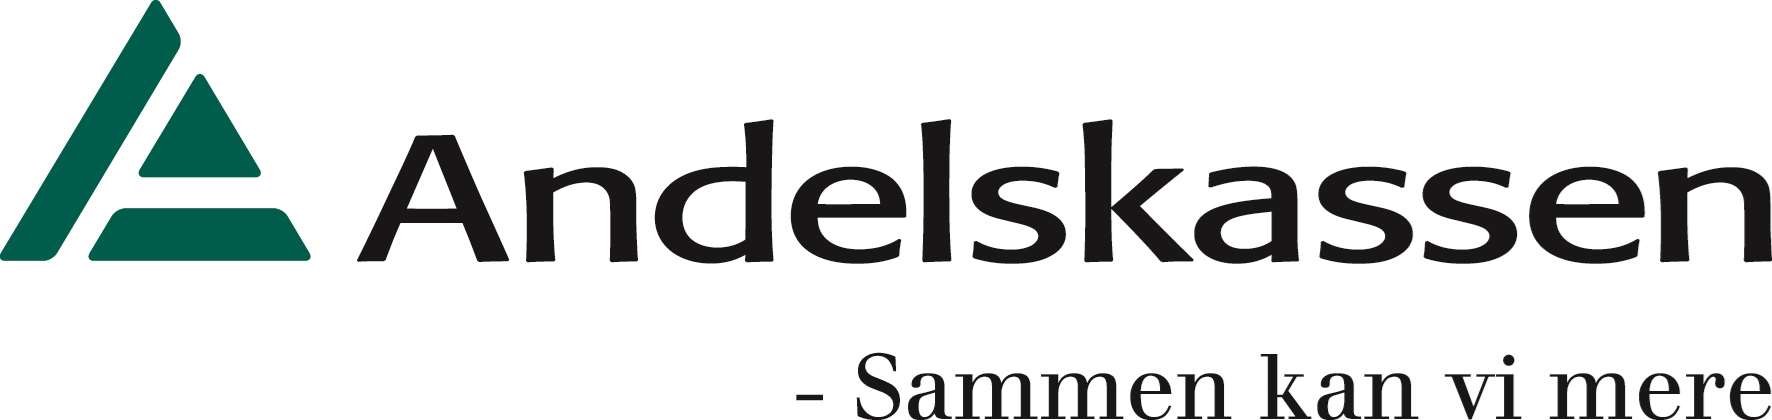 andelskassen-logo-cmyk